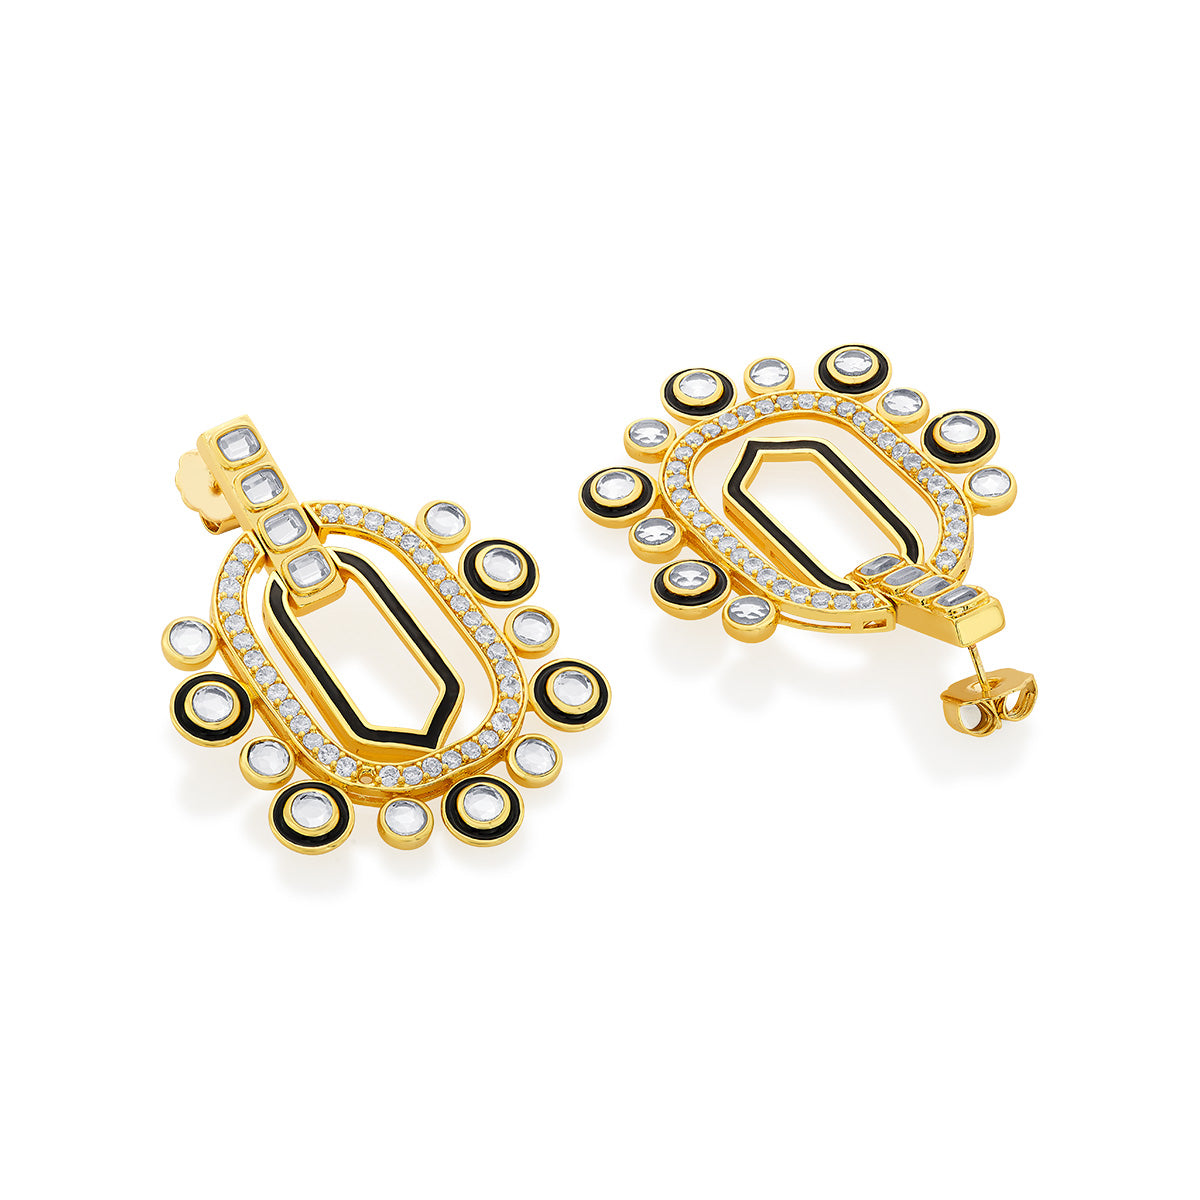 Just Jamiti Mughal Earrings - Isharya | Modern Indian Jewelry